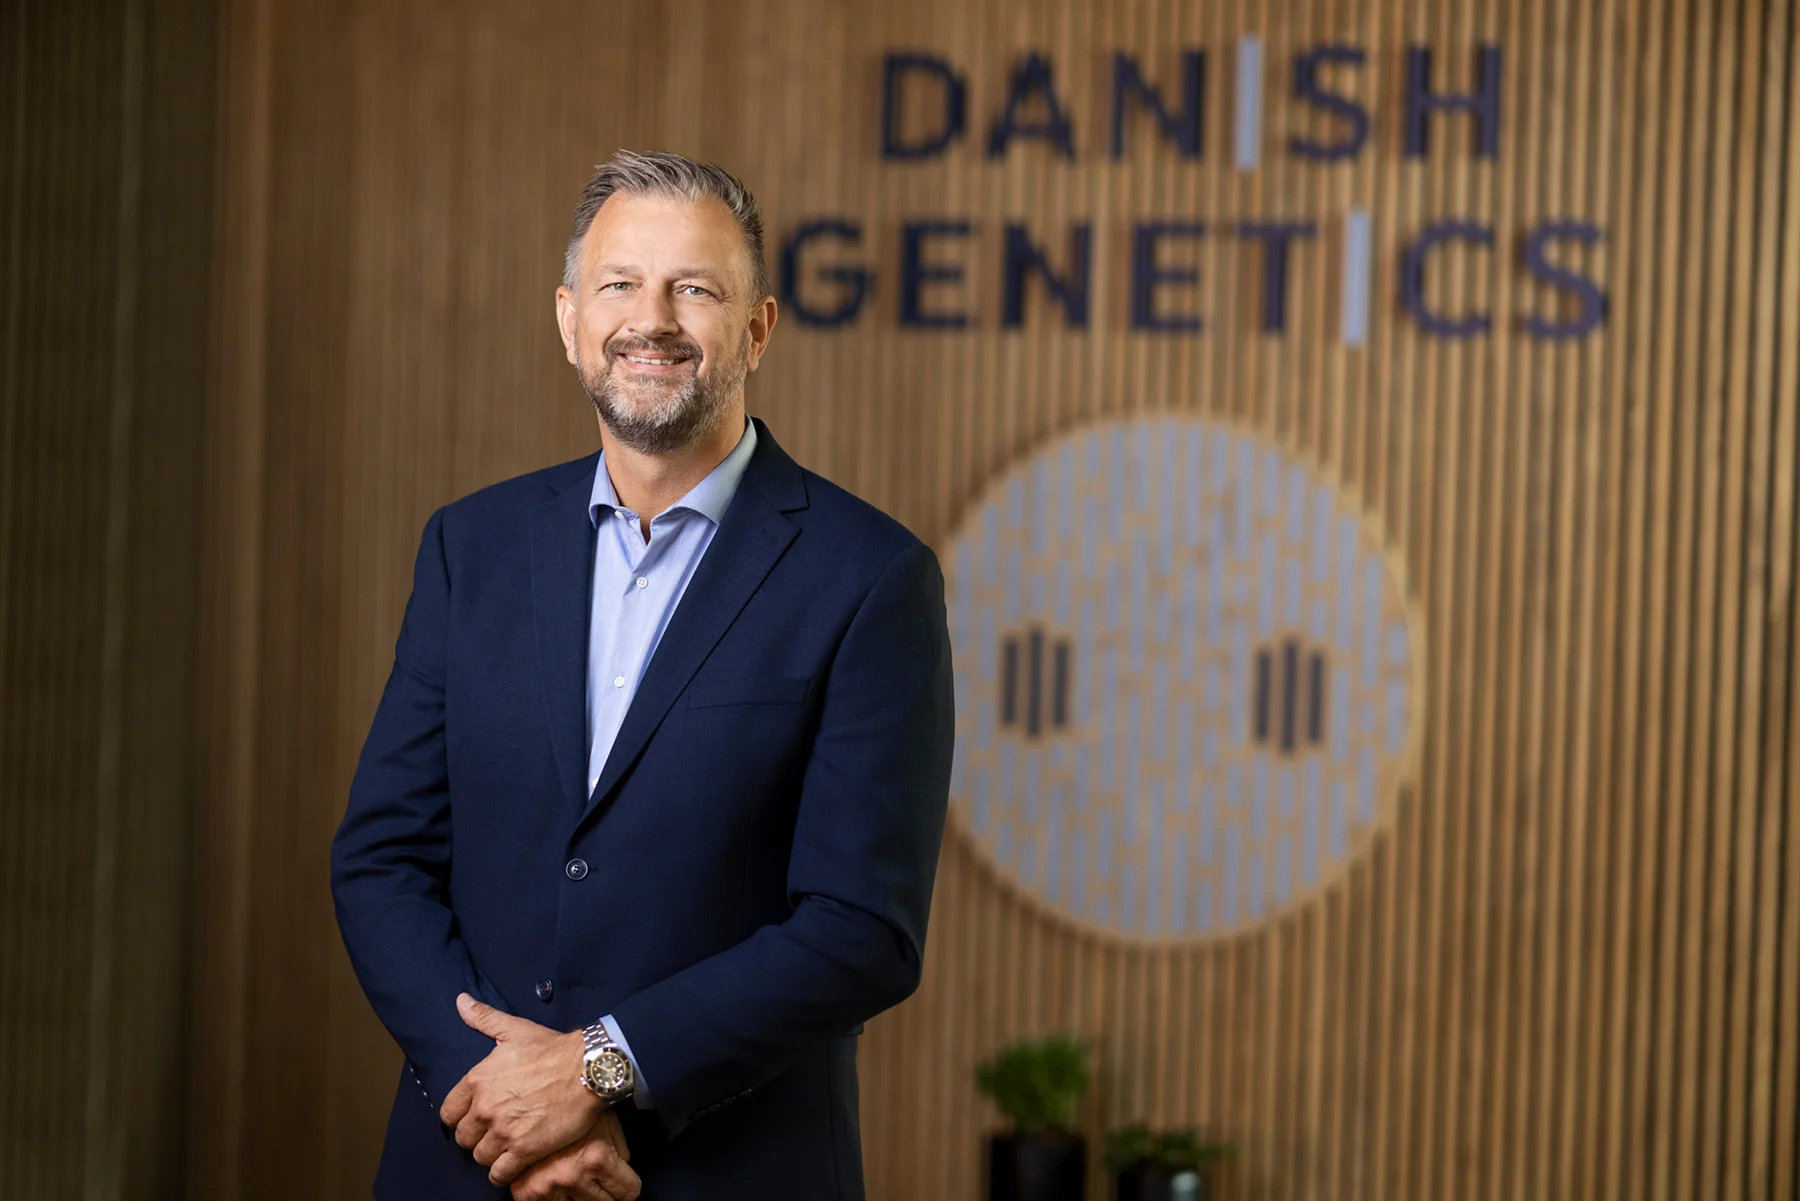 danishgenetics-6307-Edit_web